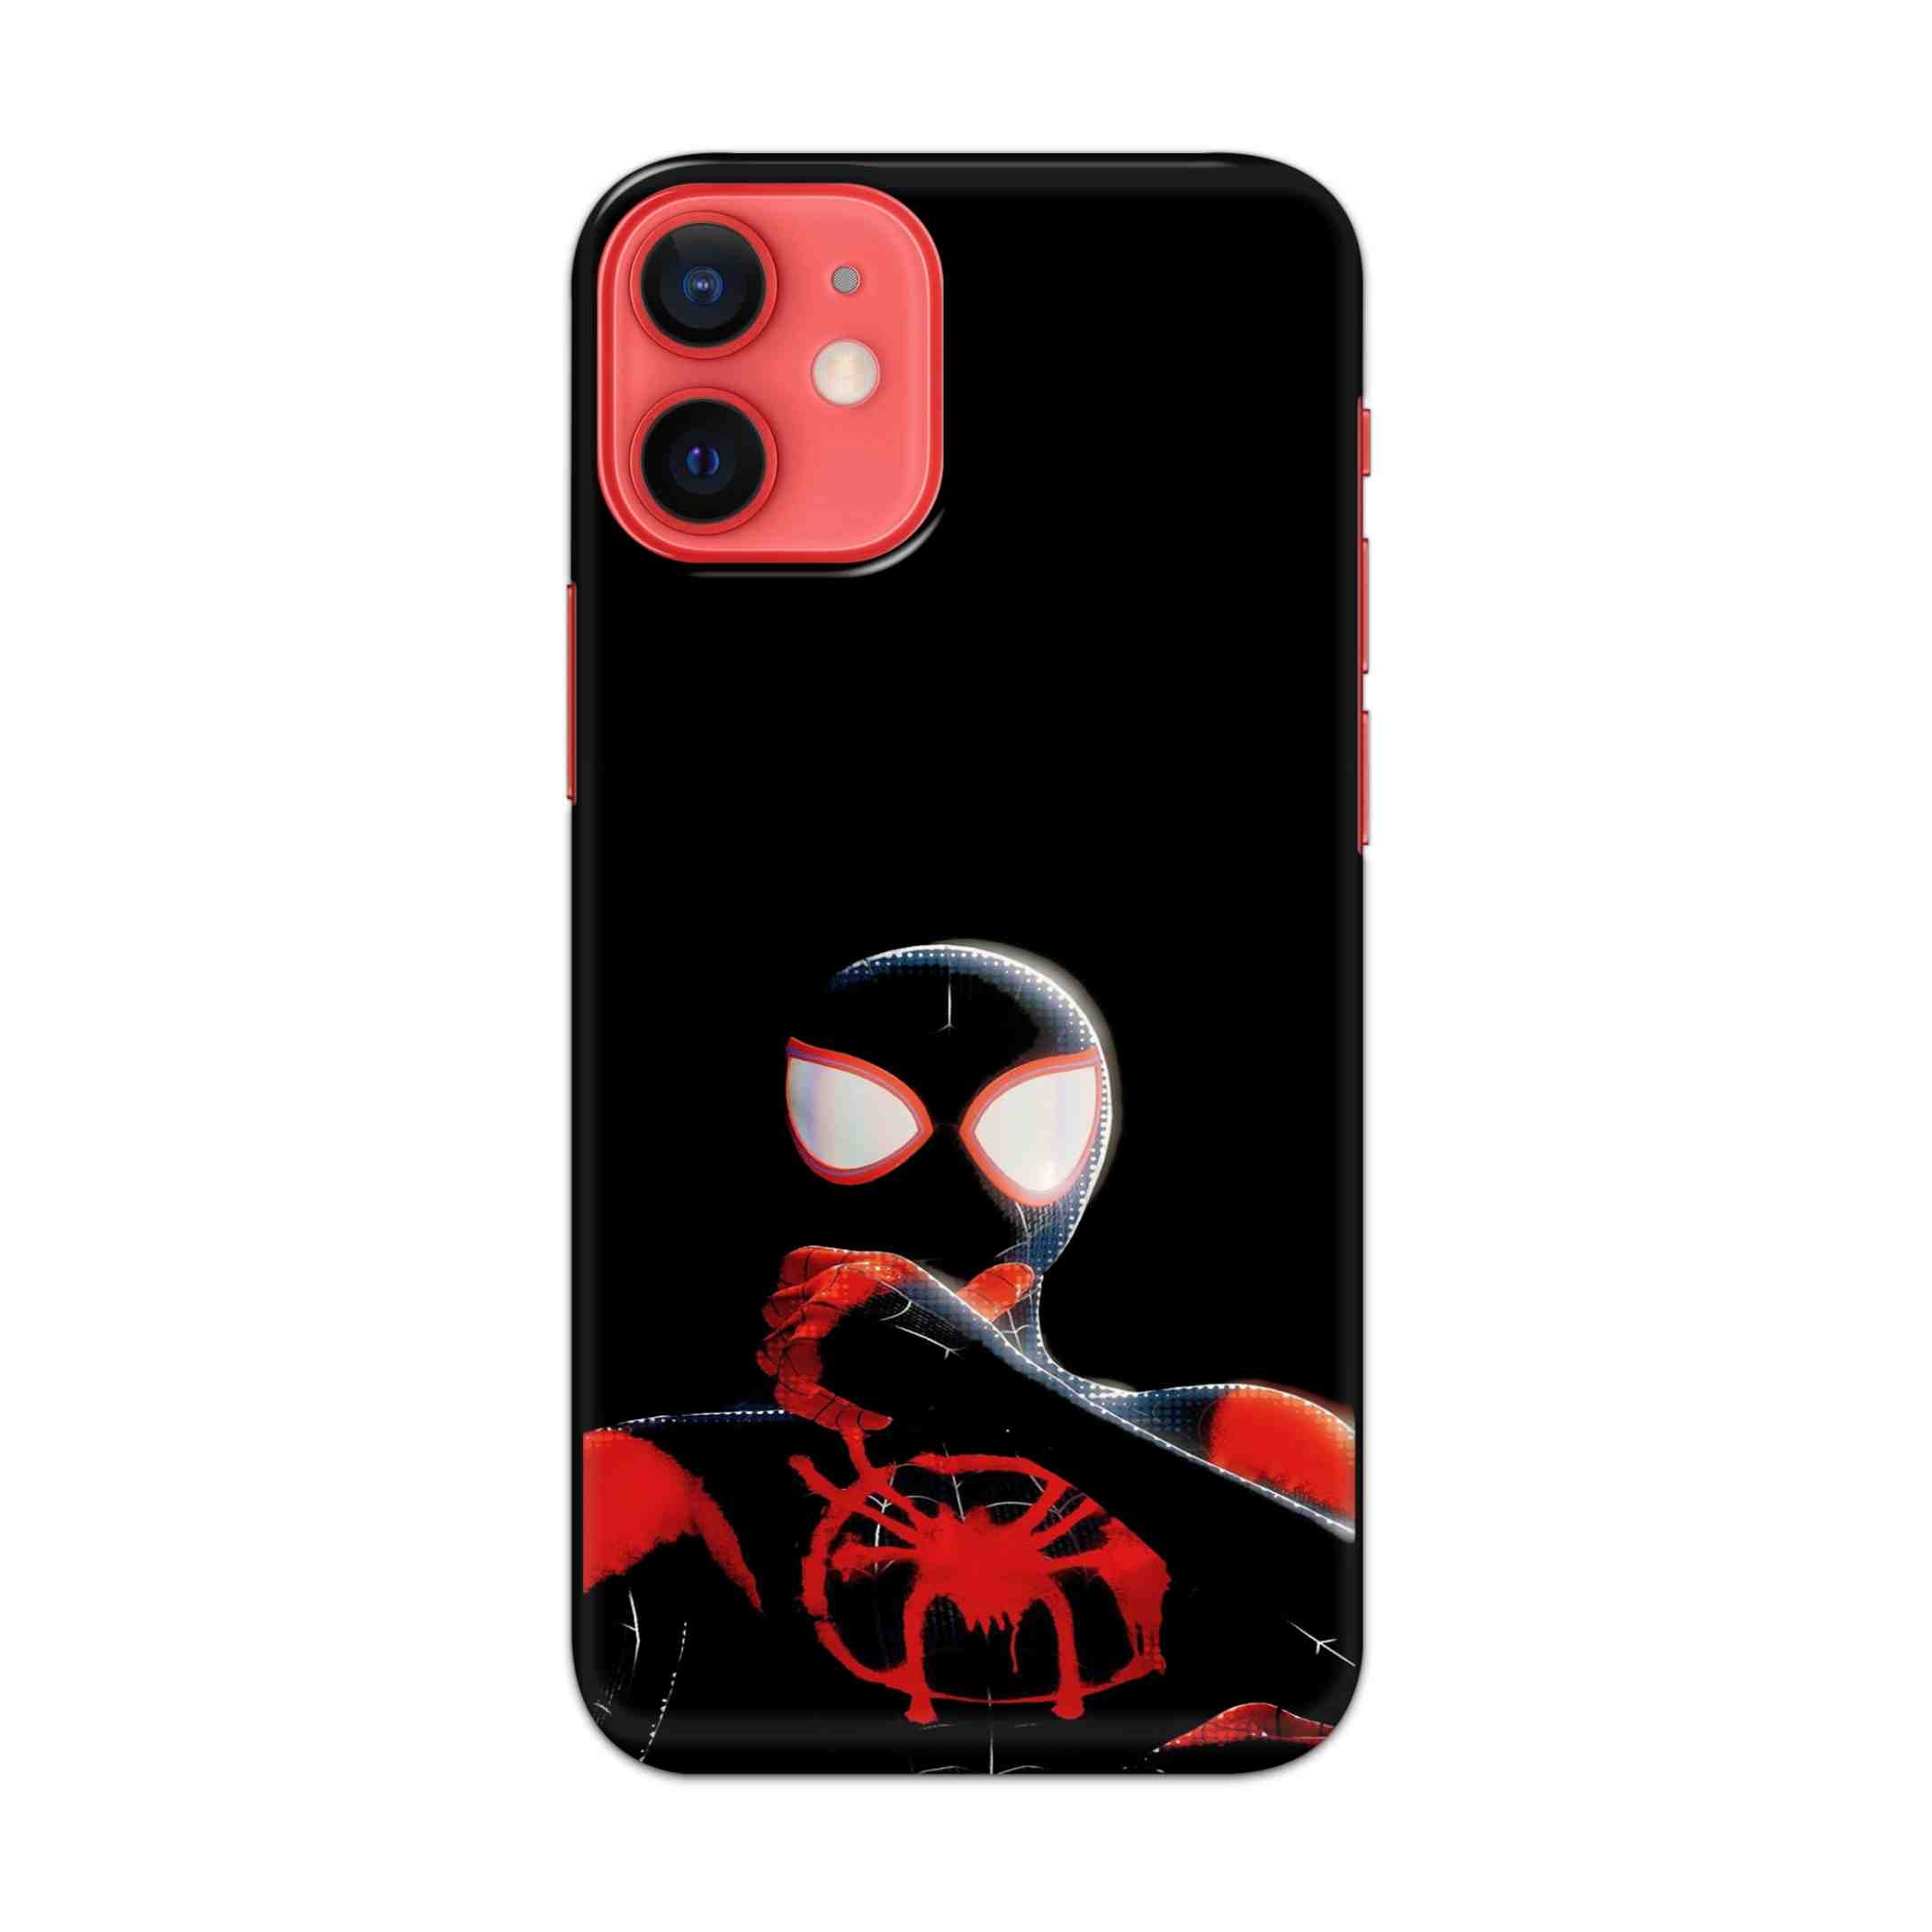 Buy Black Spiderman Hard Back Mobile Phone Case/Cover For Apple iPhone 12 mini Online